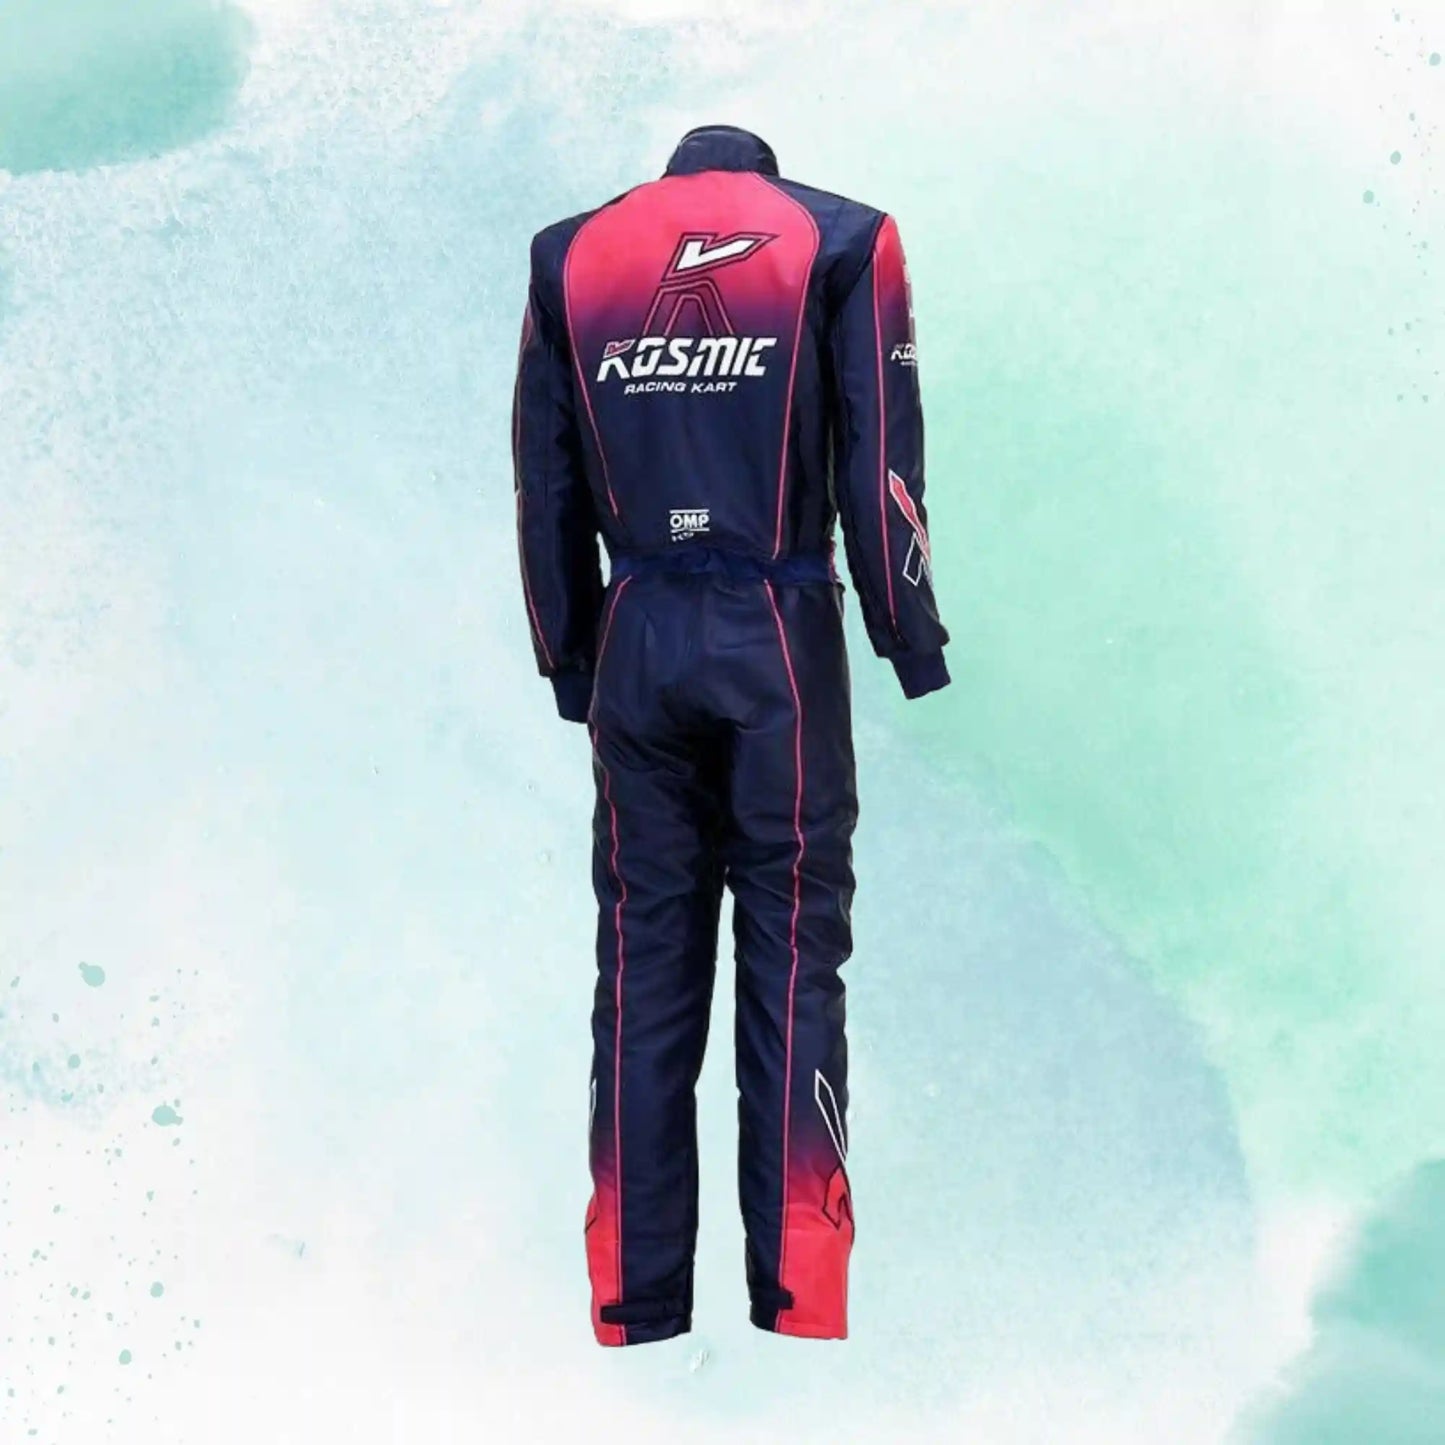 Kosmic Overall Go Kart Driver Racing Suit 2020 Sublimation Printed